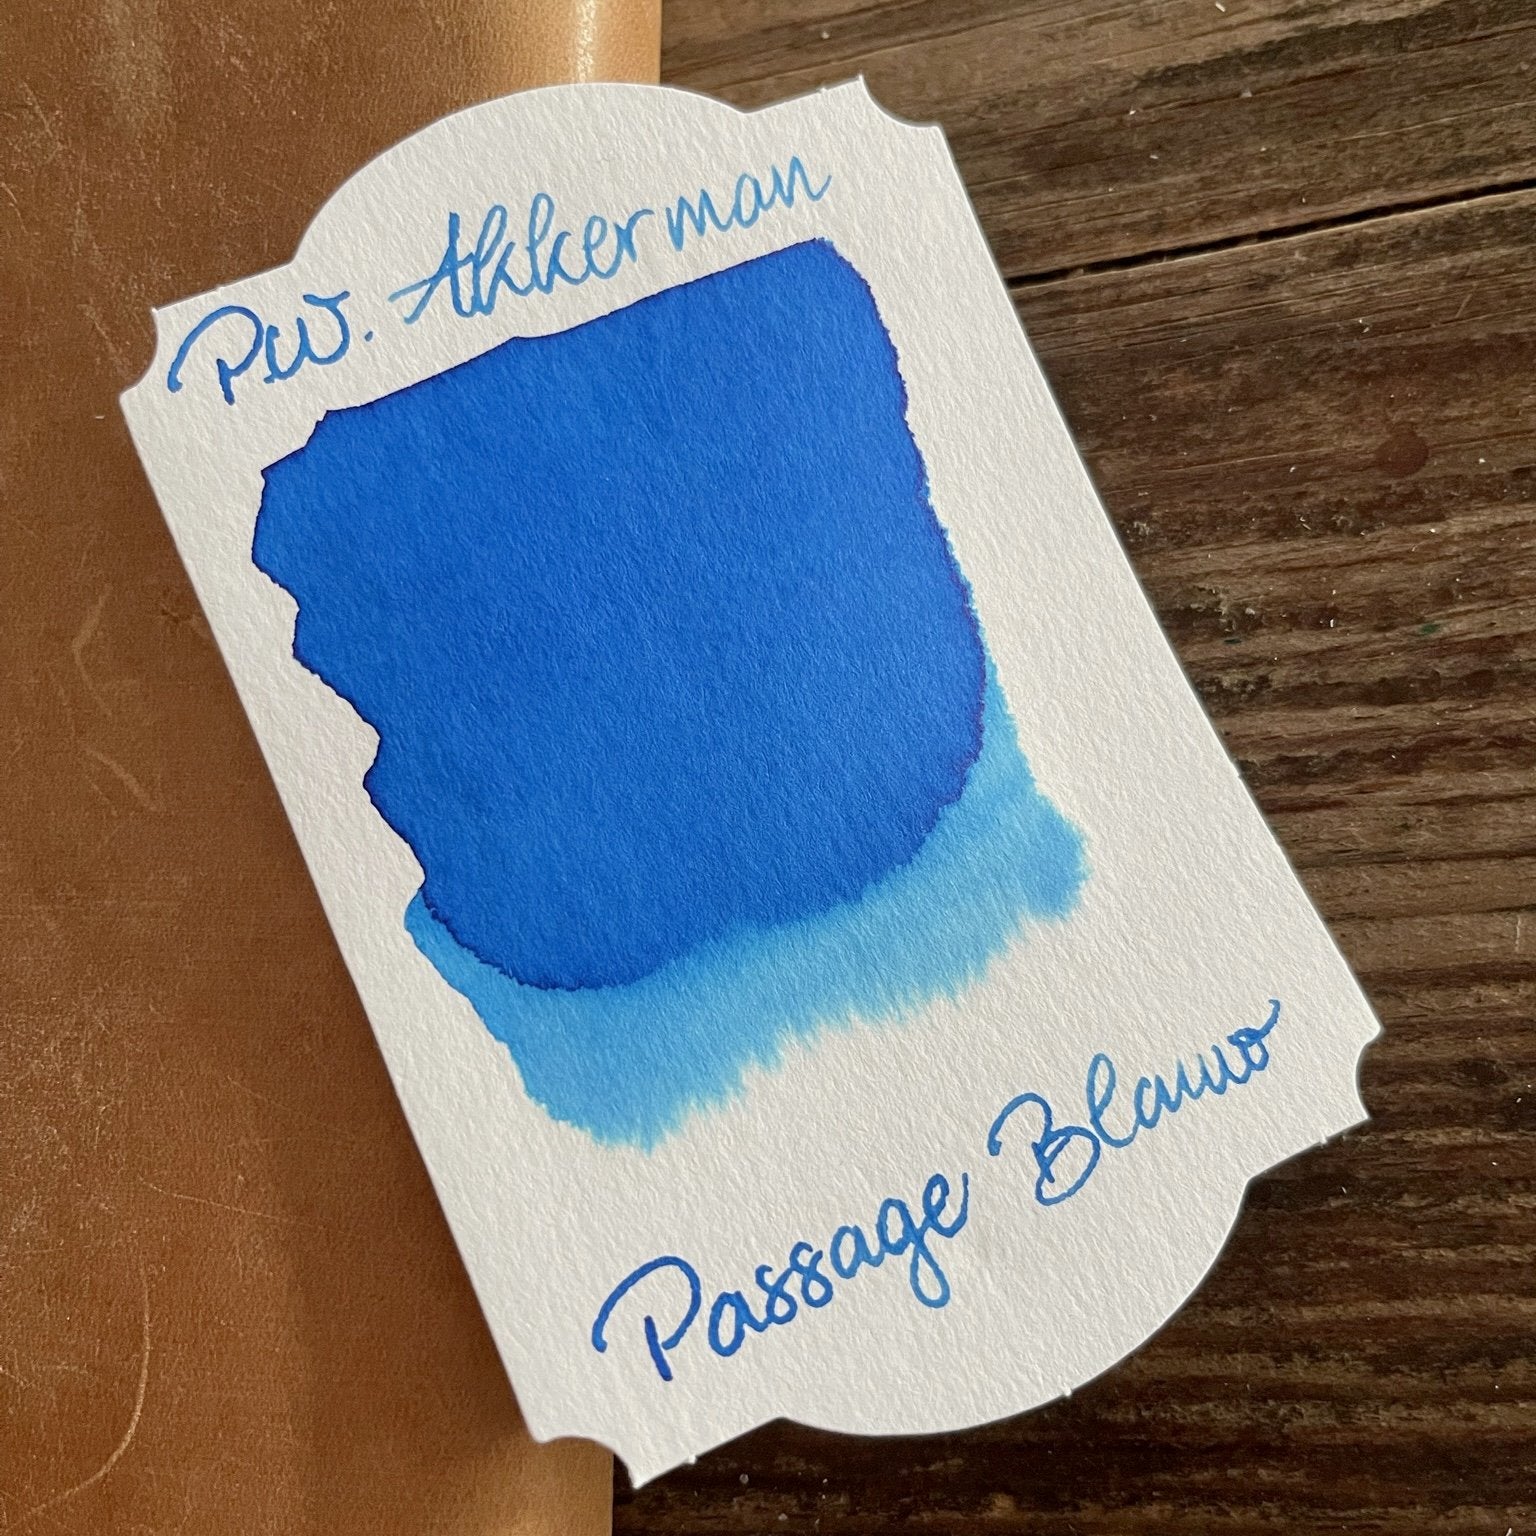 Akkerman Passage Blauw Ink